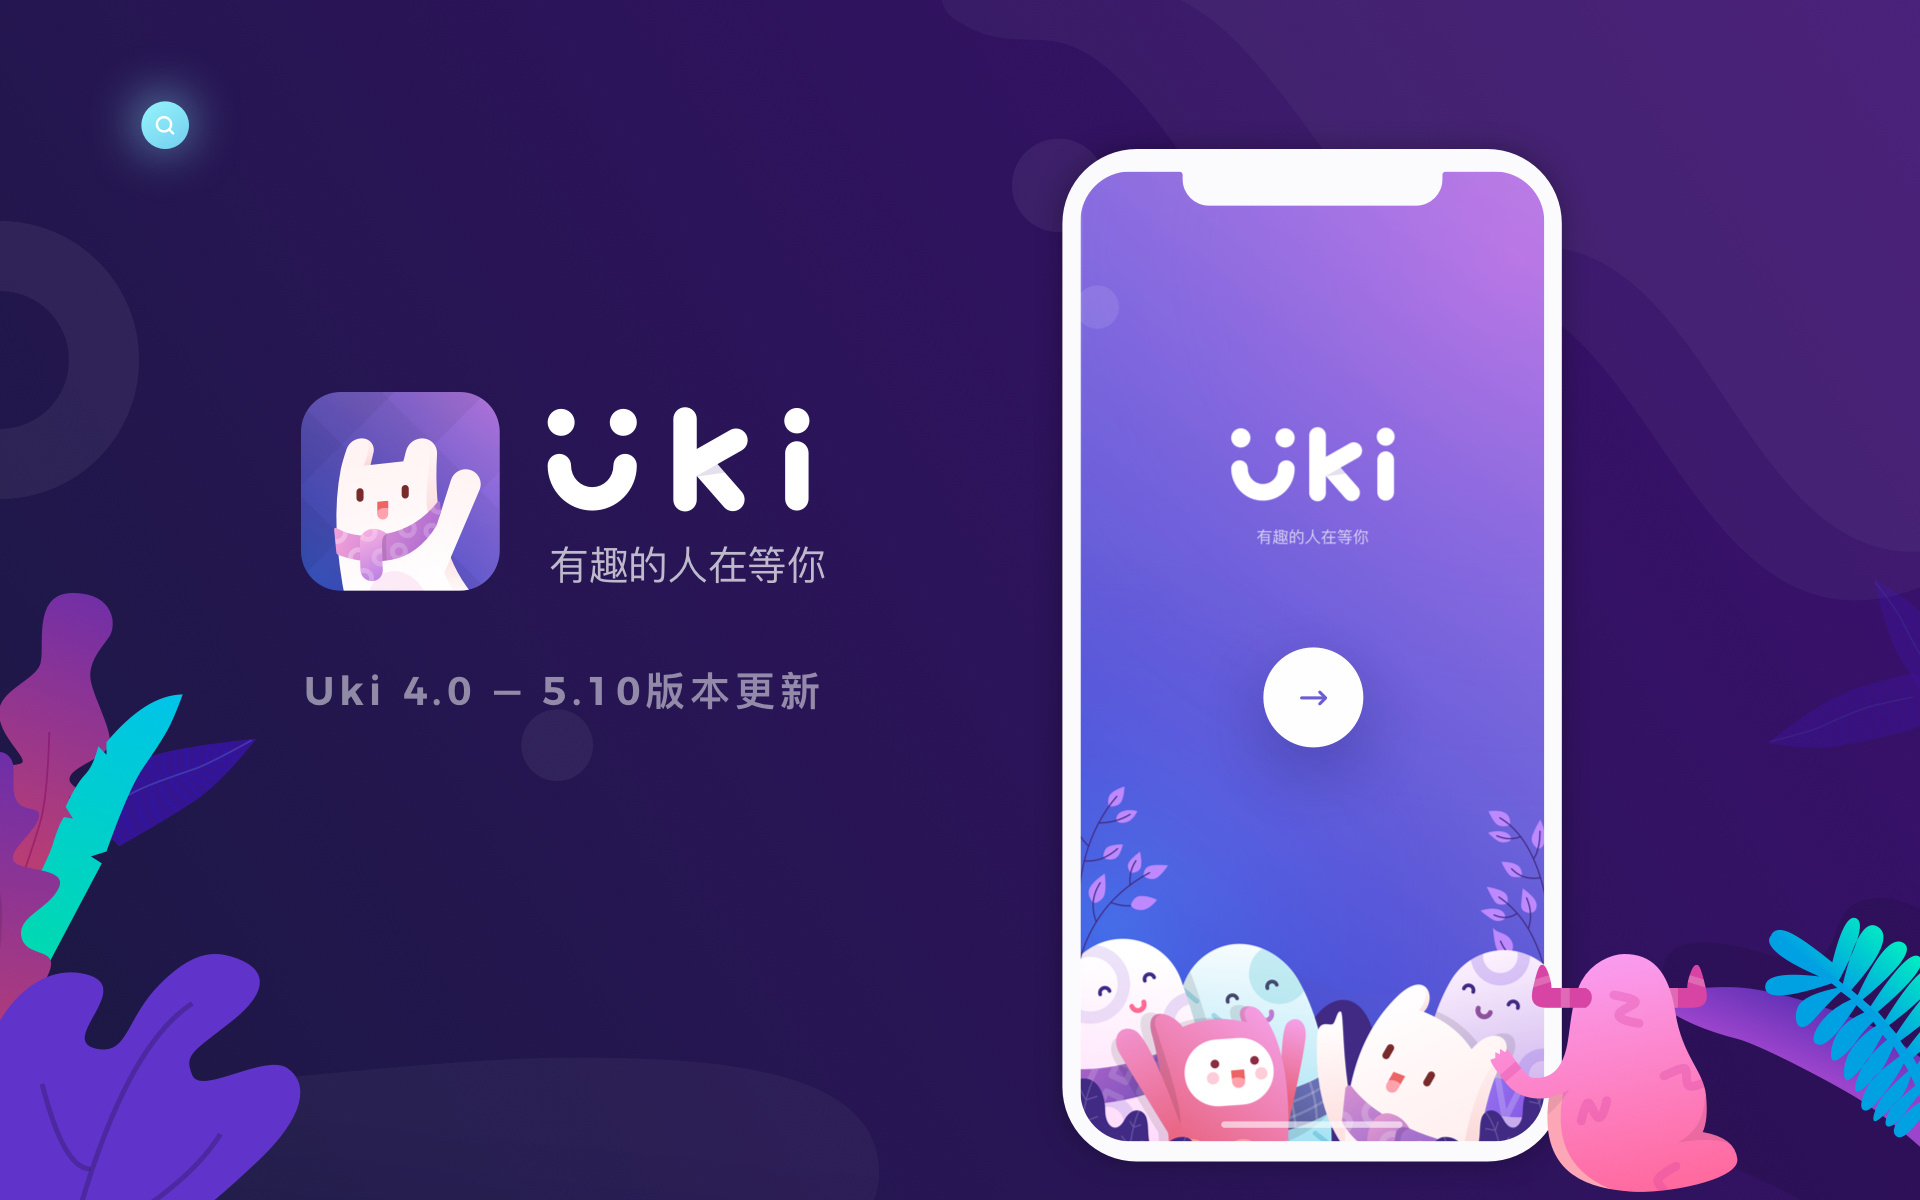 Uki社交app下载:借助先进语音技术交到更多知心朋友的手机语音社交软件